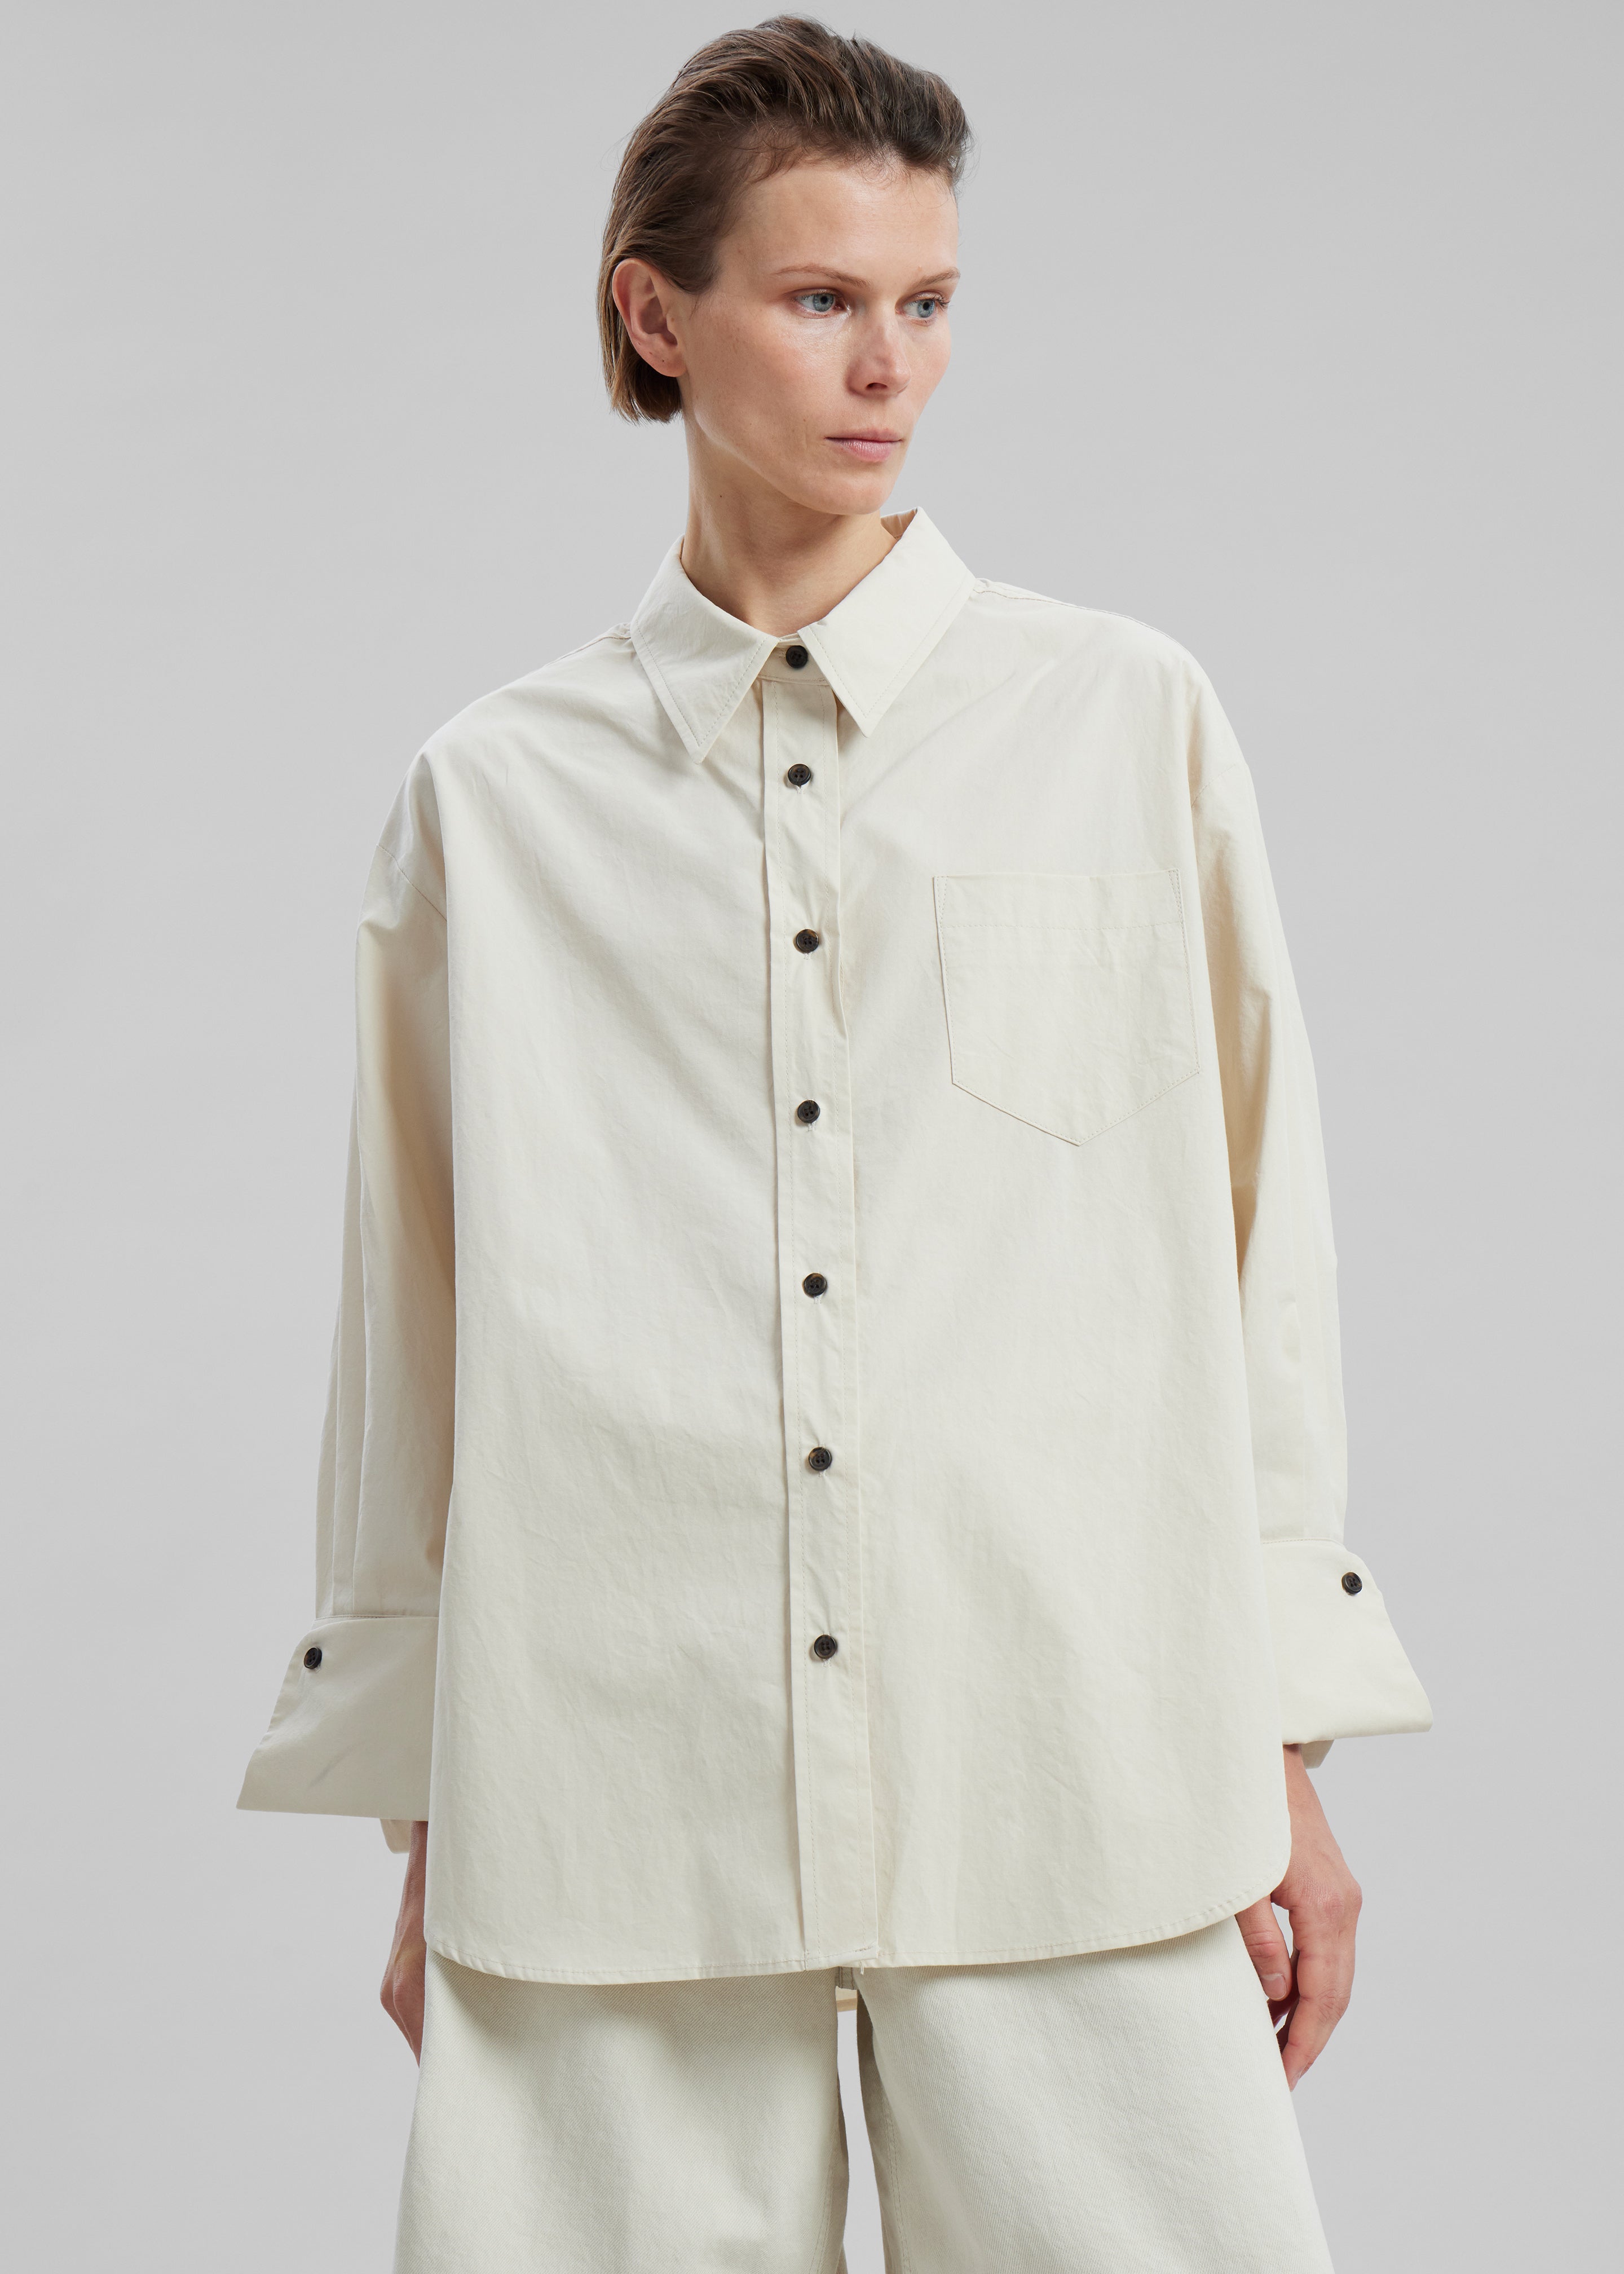 Zuri Boxy Button Up Shirt - Cream - 5